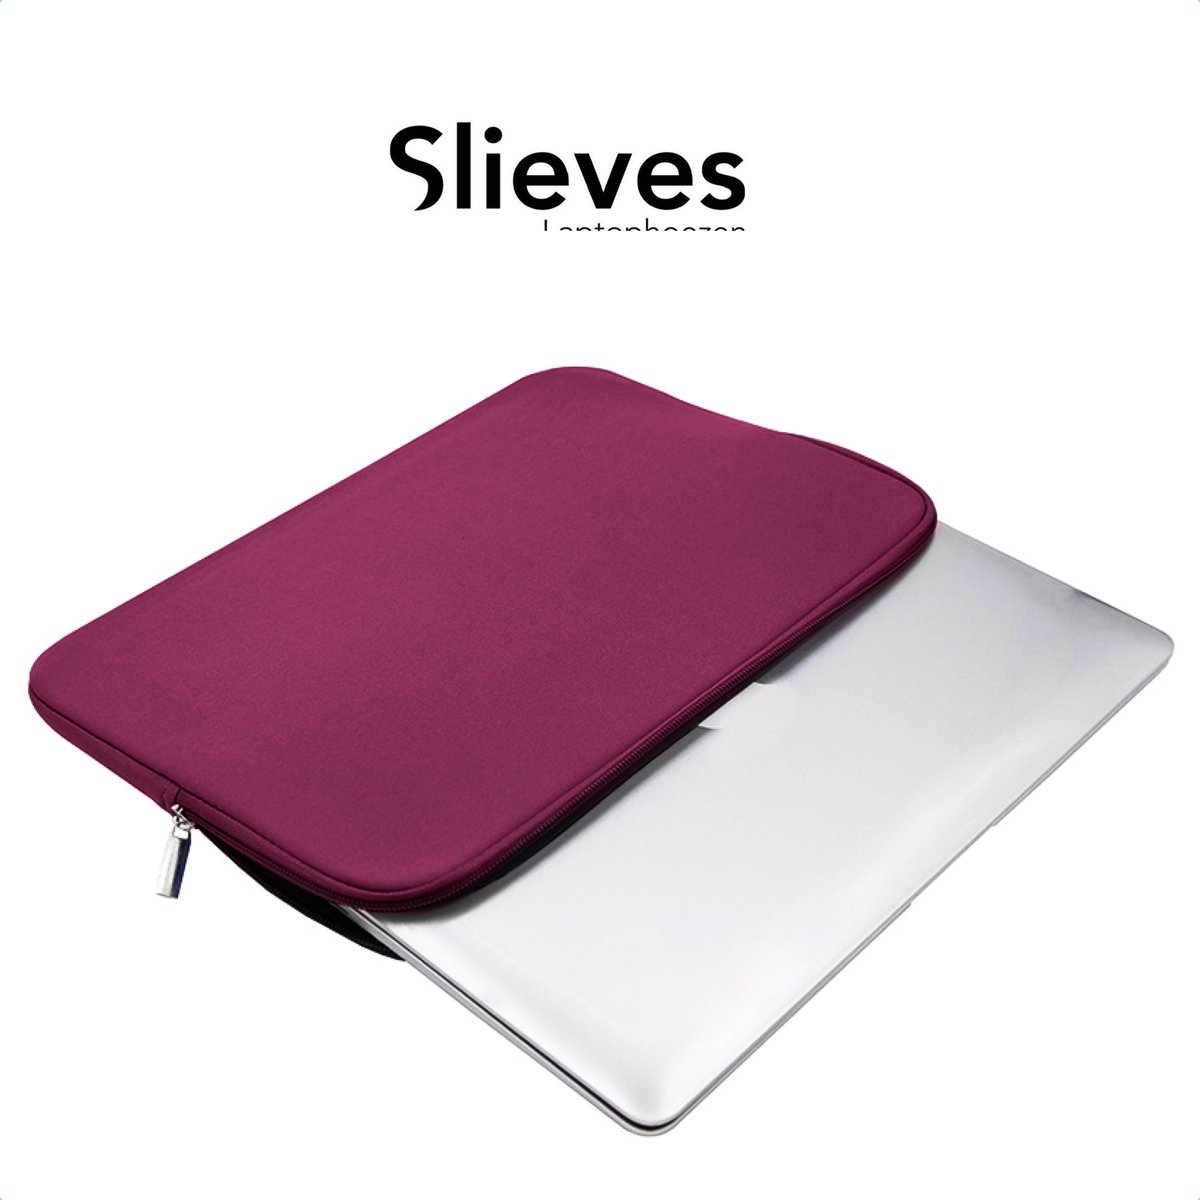 Slieves - Laptophoes - 15.6 inch - Laptop Sleeve - Schok Resistent - Neoprene - (Spat) Waterdicht - Bordeaux Rood